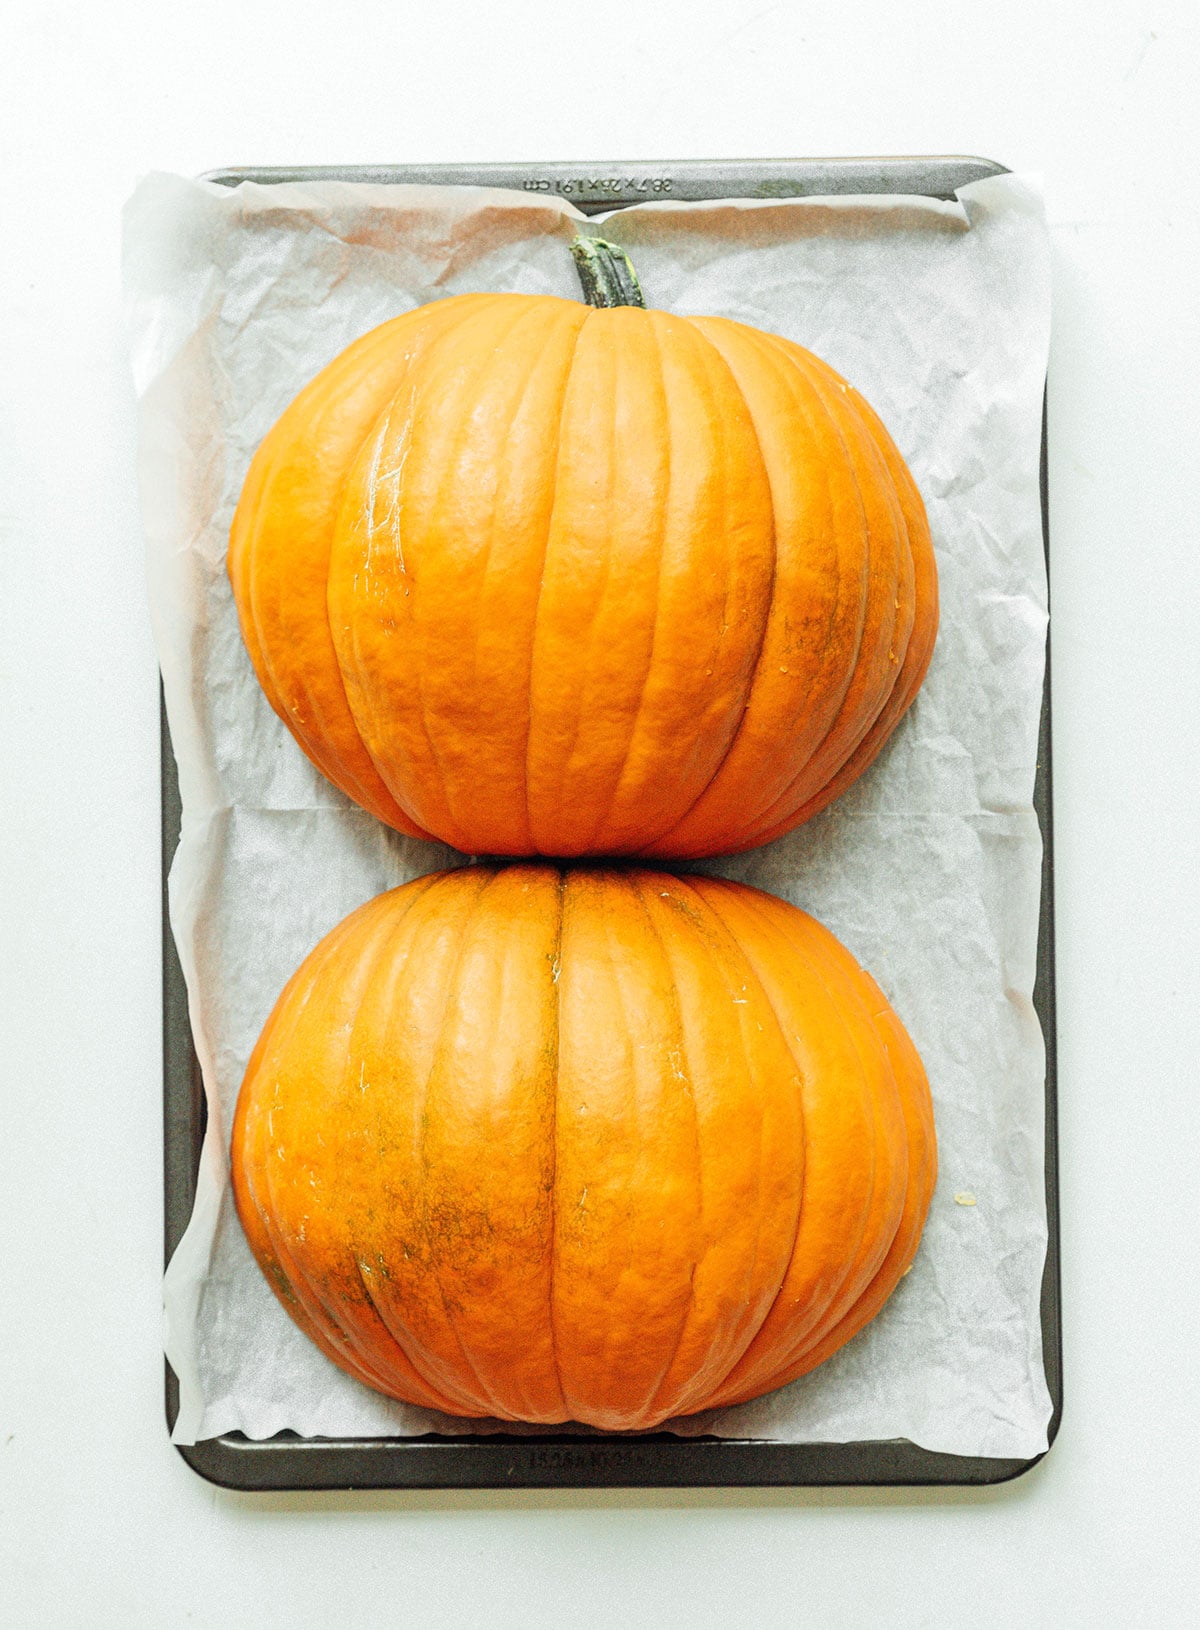 Two pumpkin halves on a baking sheet